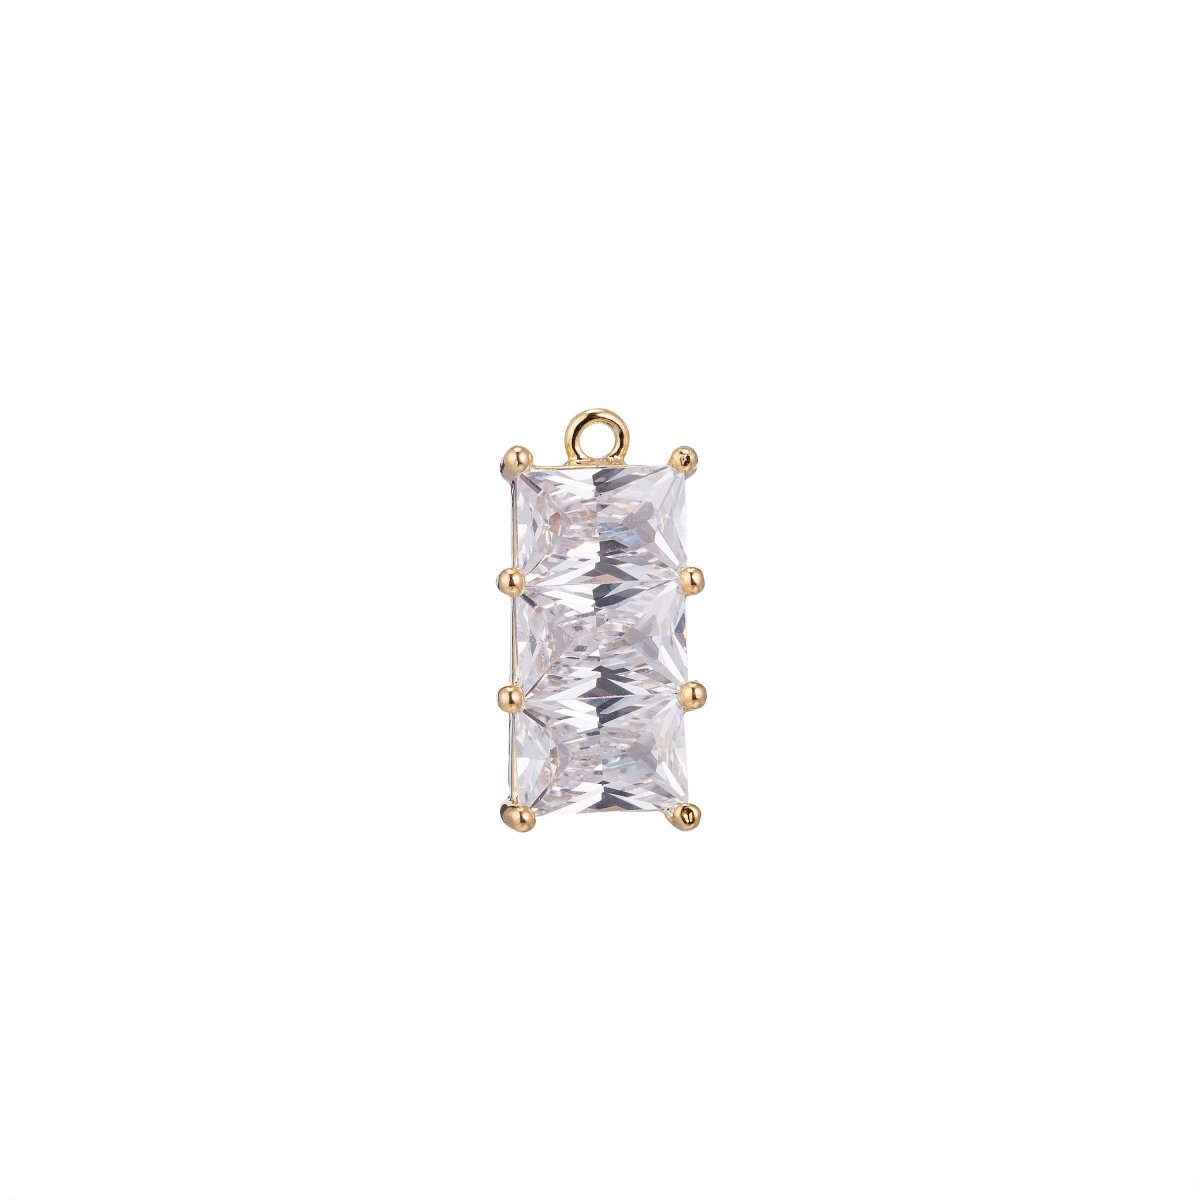 1pcs 18k Gold Filed Rectangular Cut Pendant for necklace Earring April Birthstone Cubic Zirconia Square Diamond Shape Charm, C-373 - DLUXCA